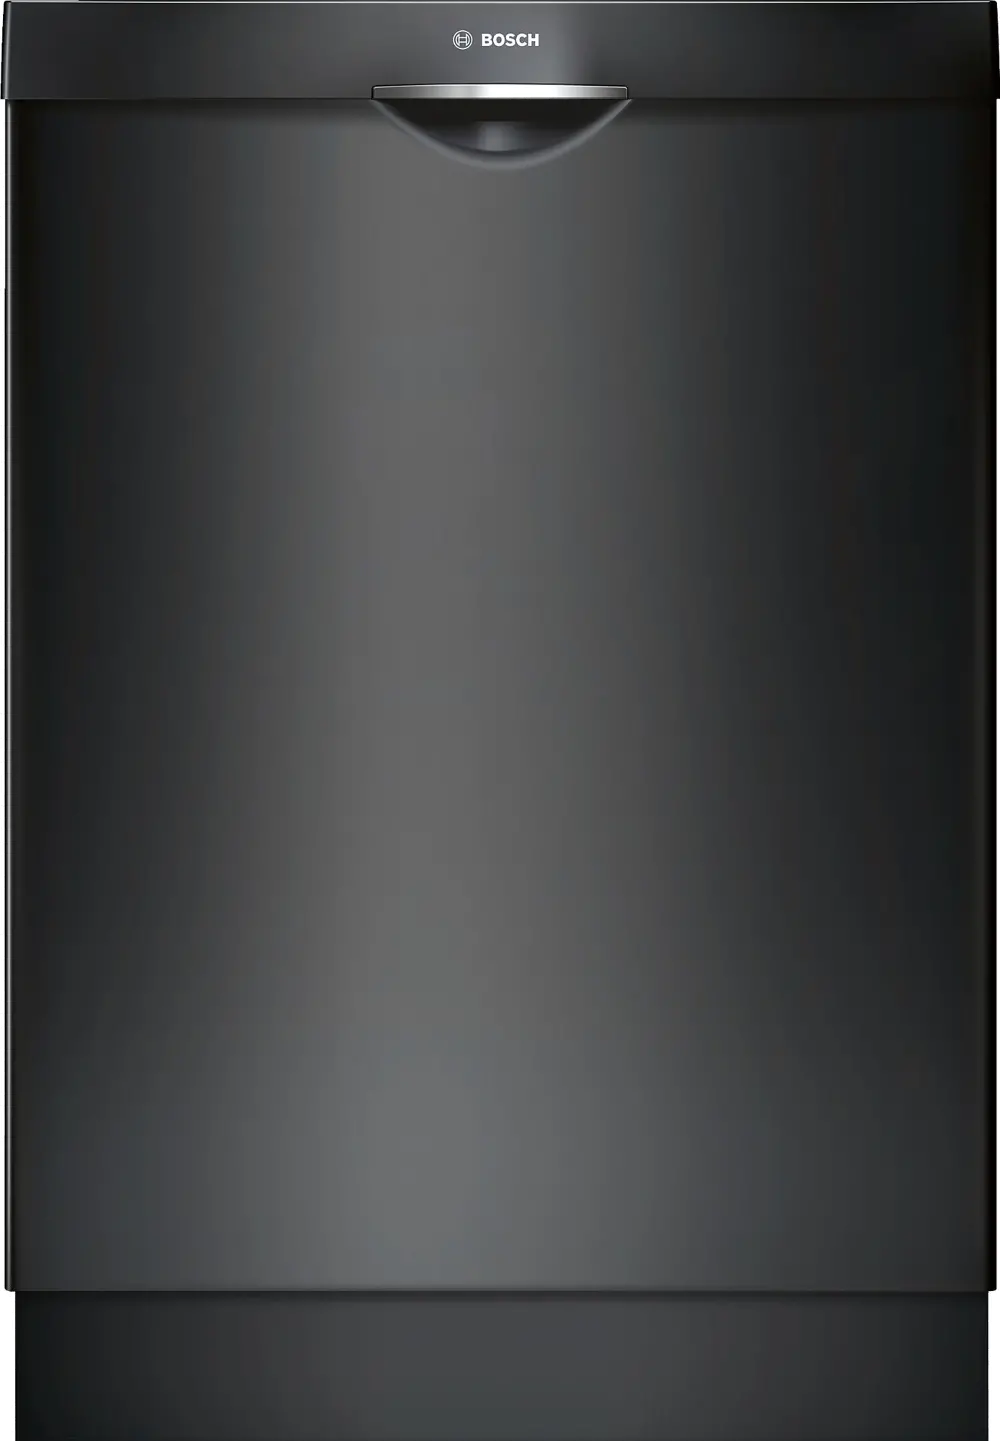 SHS863WD6N Bosch Dishwasher with Hidden Controls - Black 300 Series-1